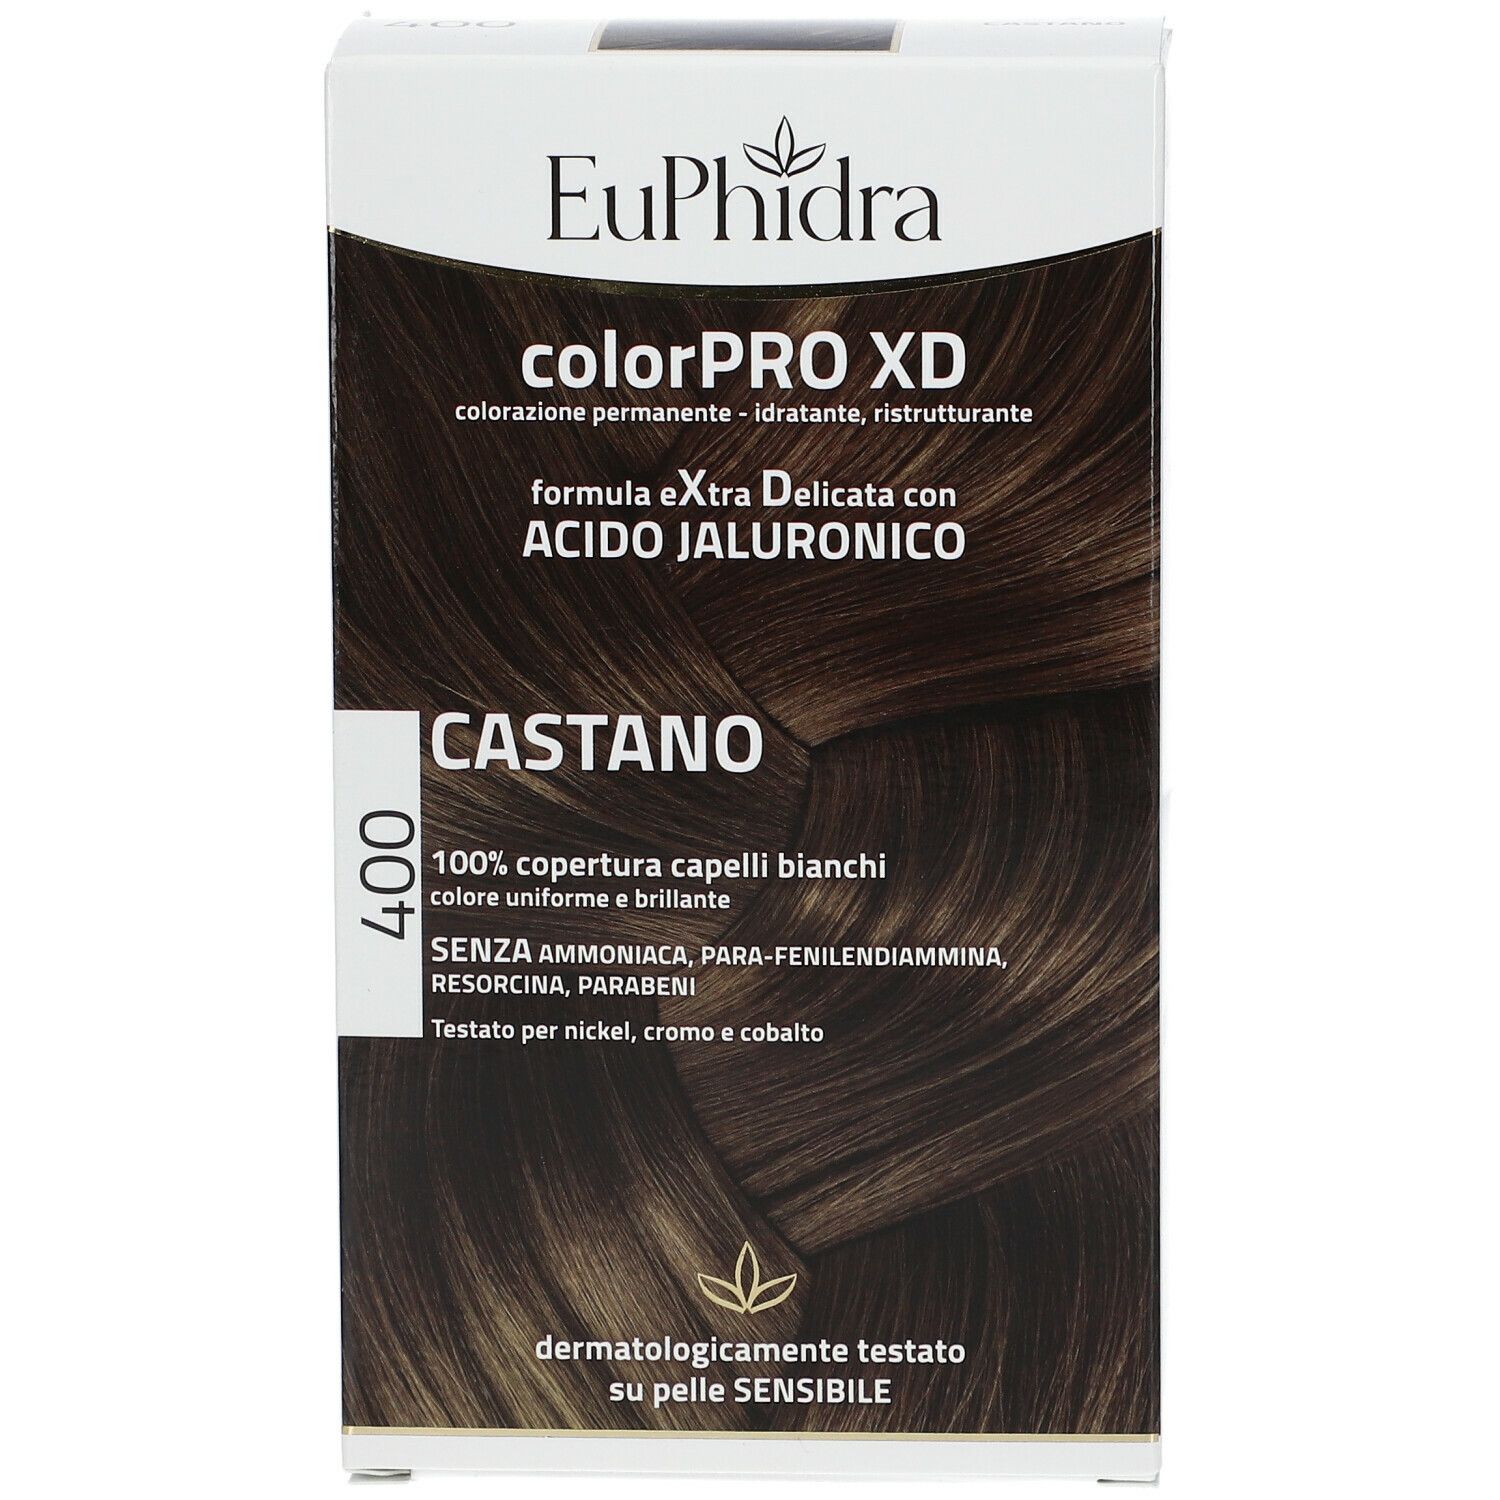 Euphidra ColorPRO XD Castano 400